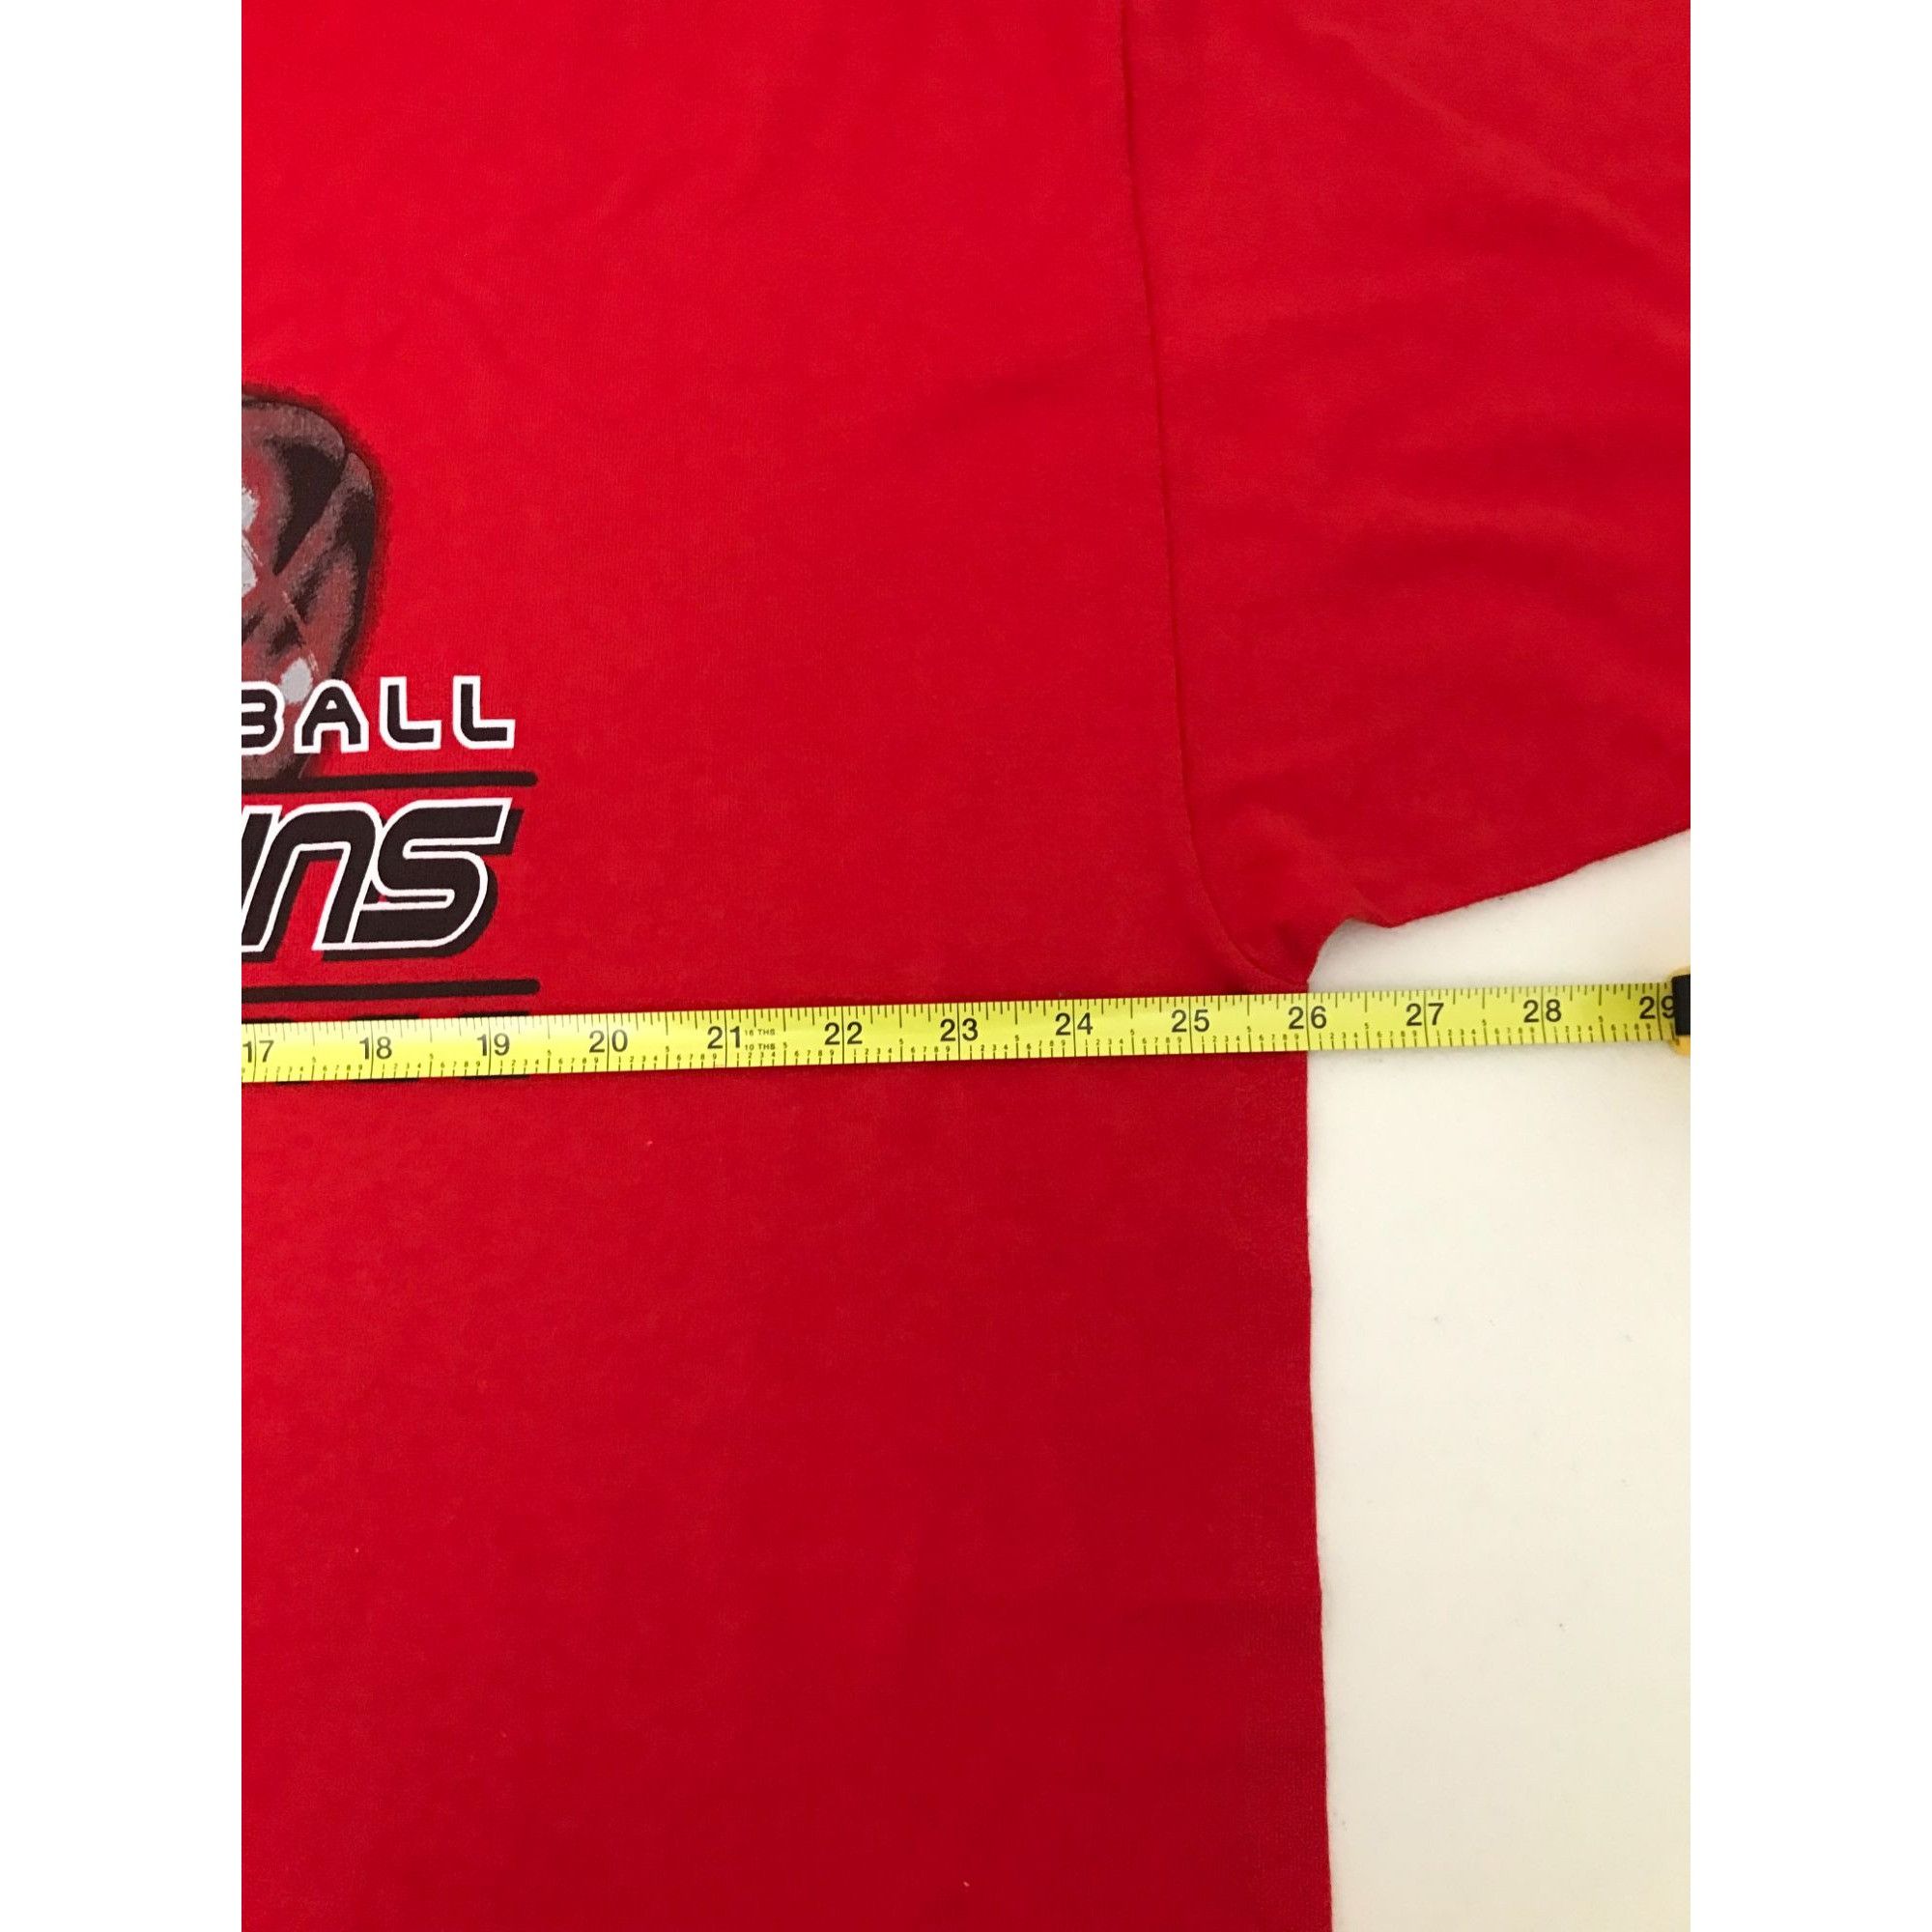 Gildan Gildan Dry Blend NFL Crossplains Mens XXL Red T Shirt *13 Size US XXL / EU 58 / 5 - 2 Preview